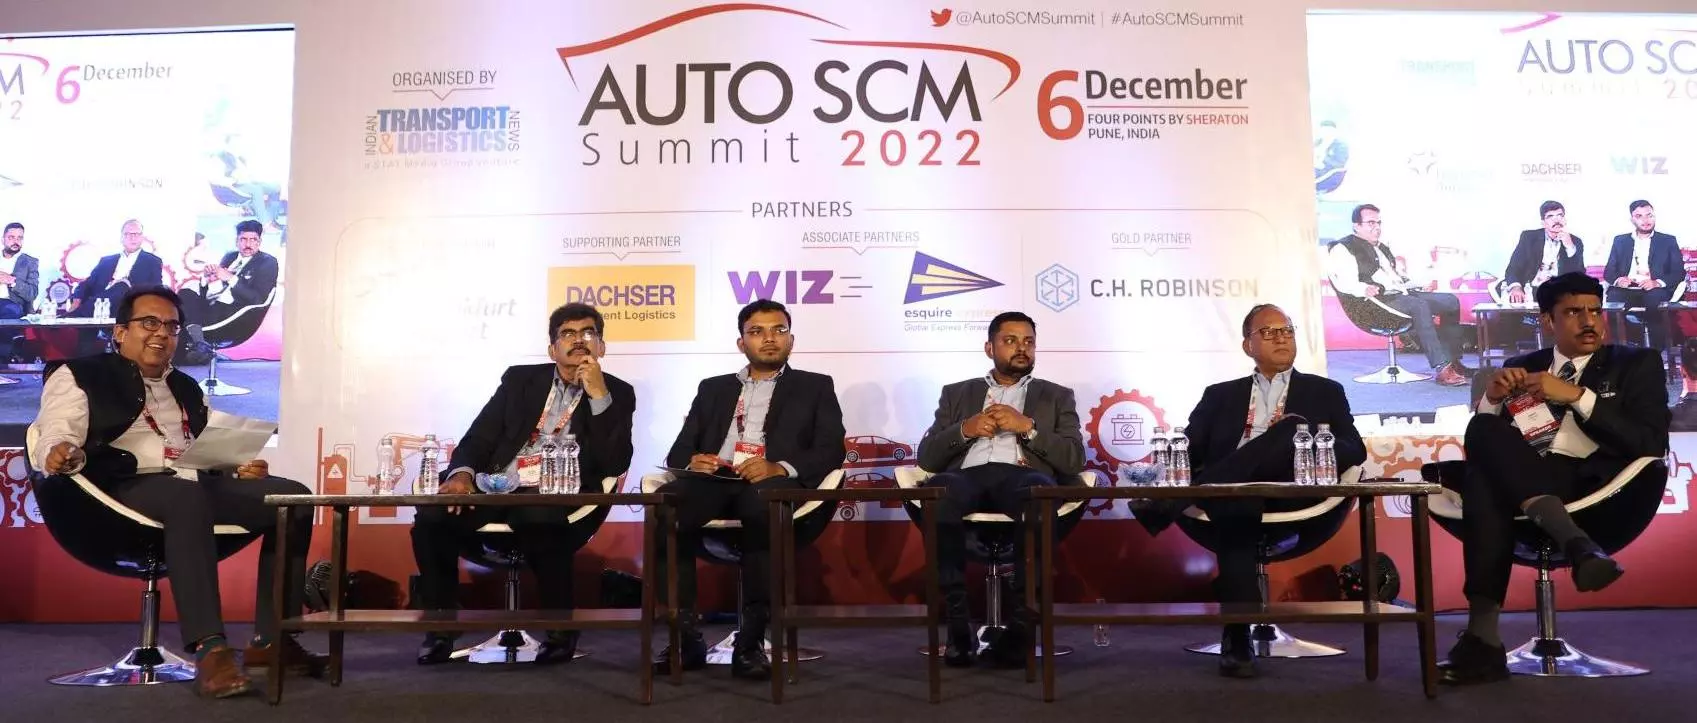 (L-R) Javin Bhinde of Syncore (Moderator), Sanjay Suranglikar of TATA AutoComp Systems, Manish Shrivastava of Spark Minda, Krishna Giridharan of C.H.Robinson, Mohan Kadam of Dana India and Satish Lakkaraju of WIZ.